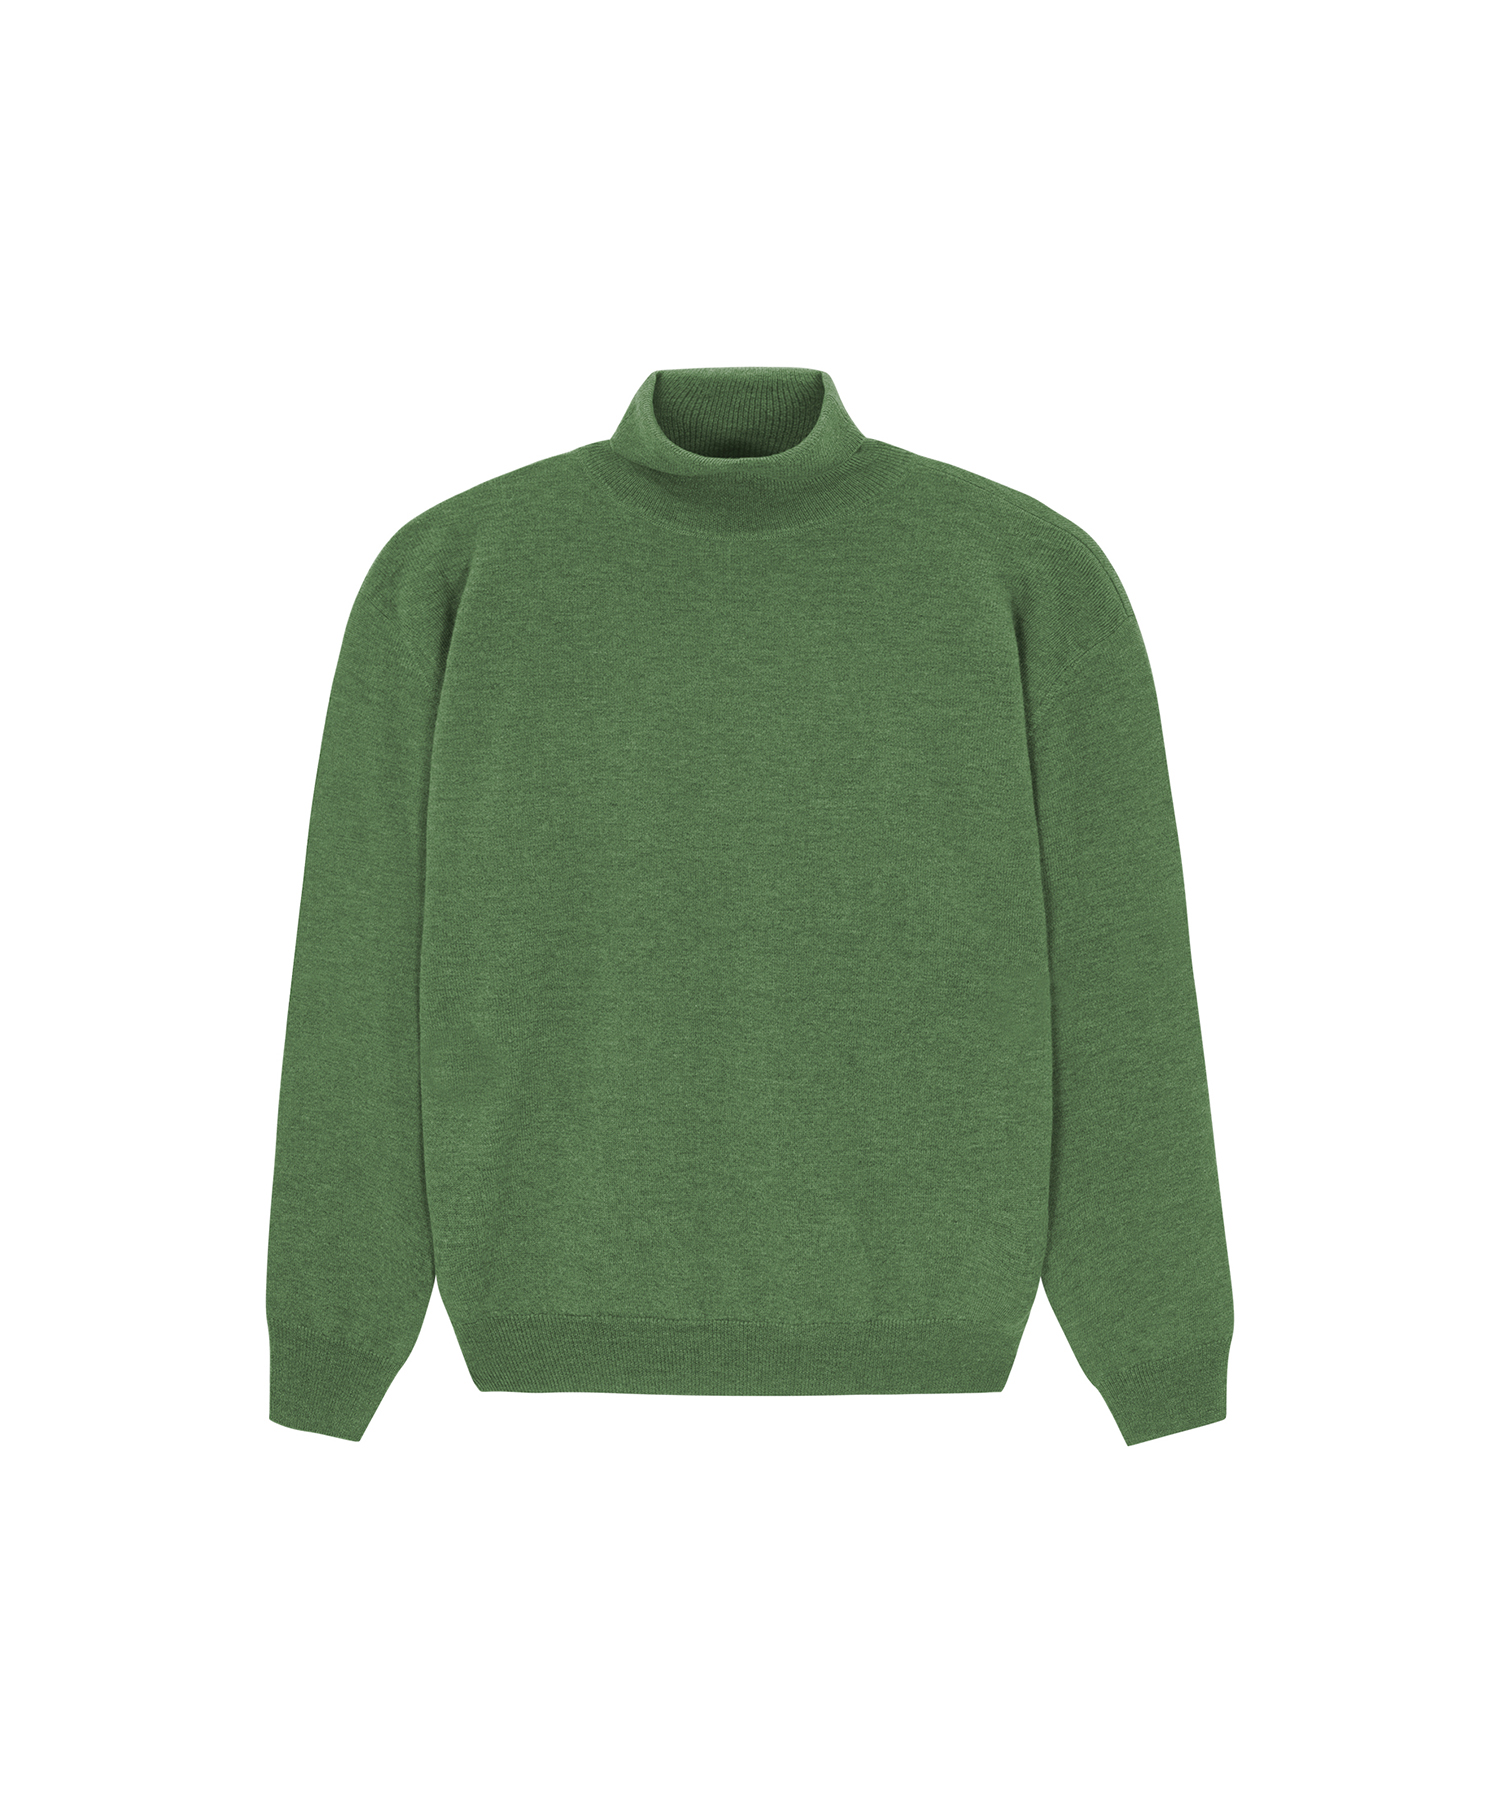 Superfine Merino Wool Turtleneck - Green